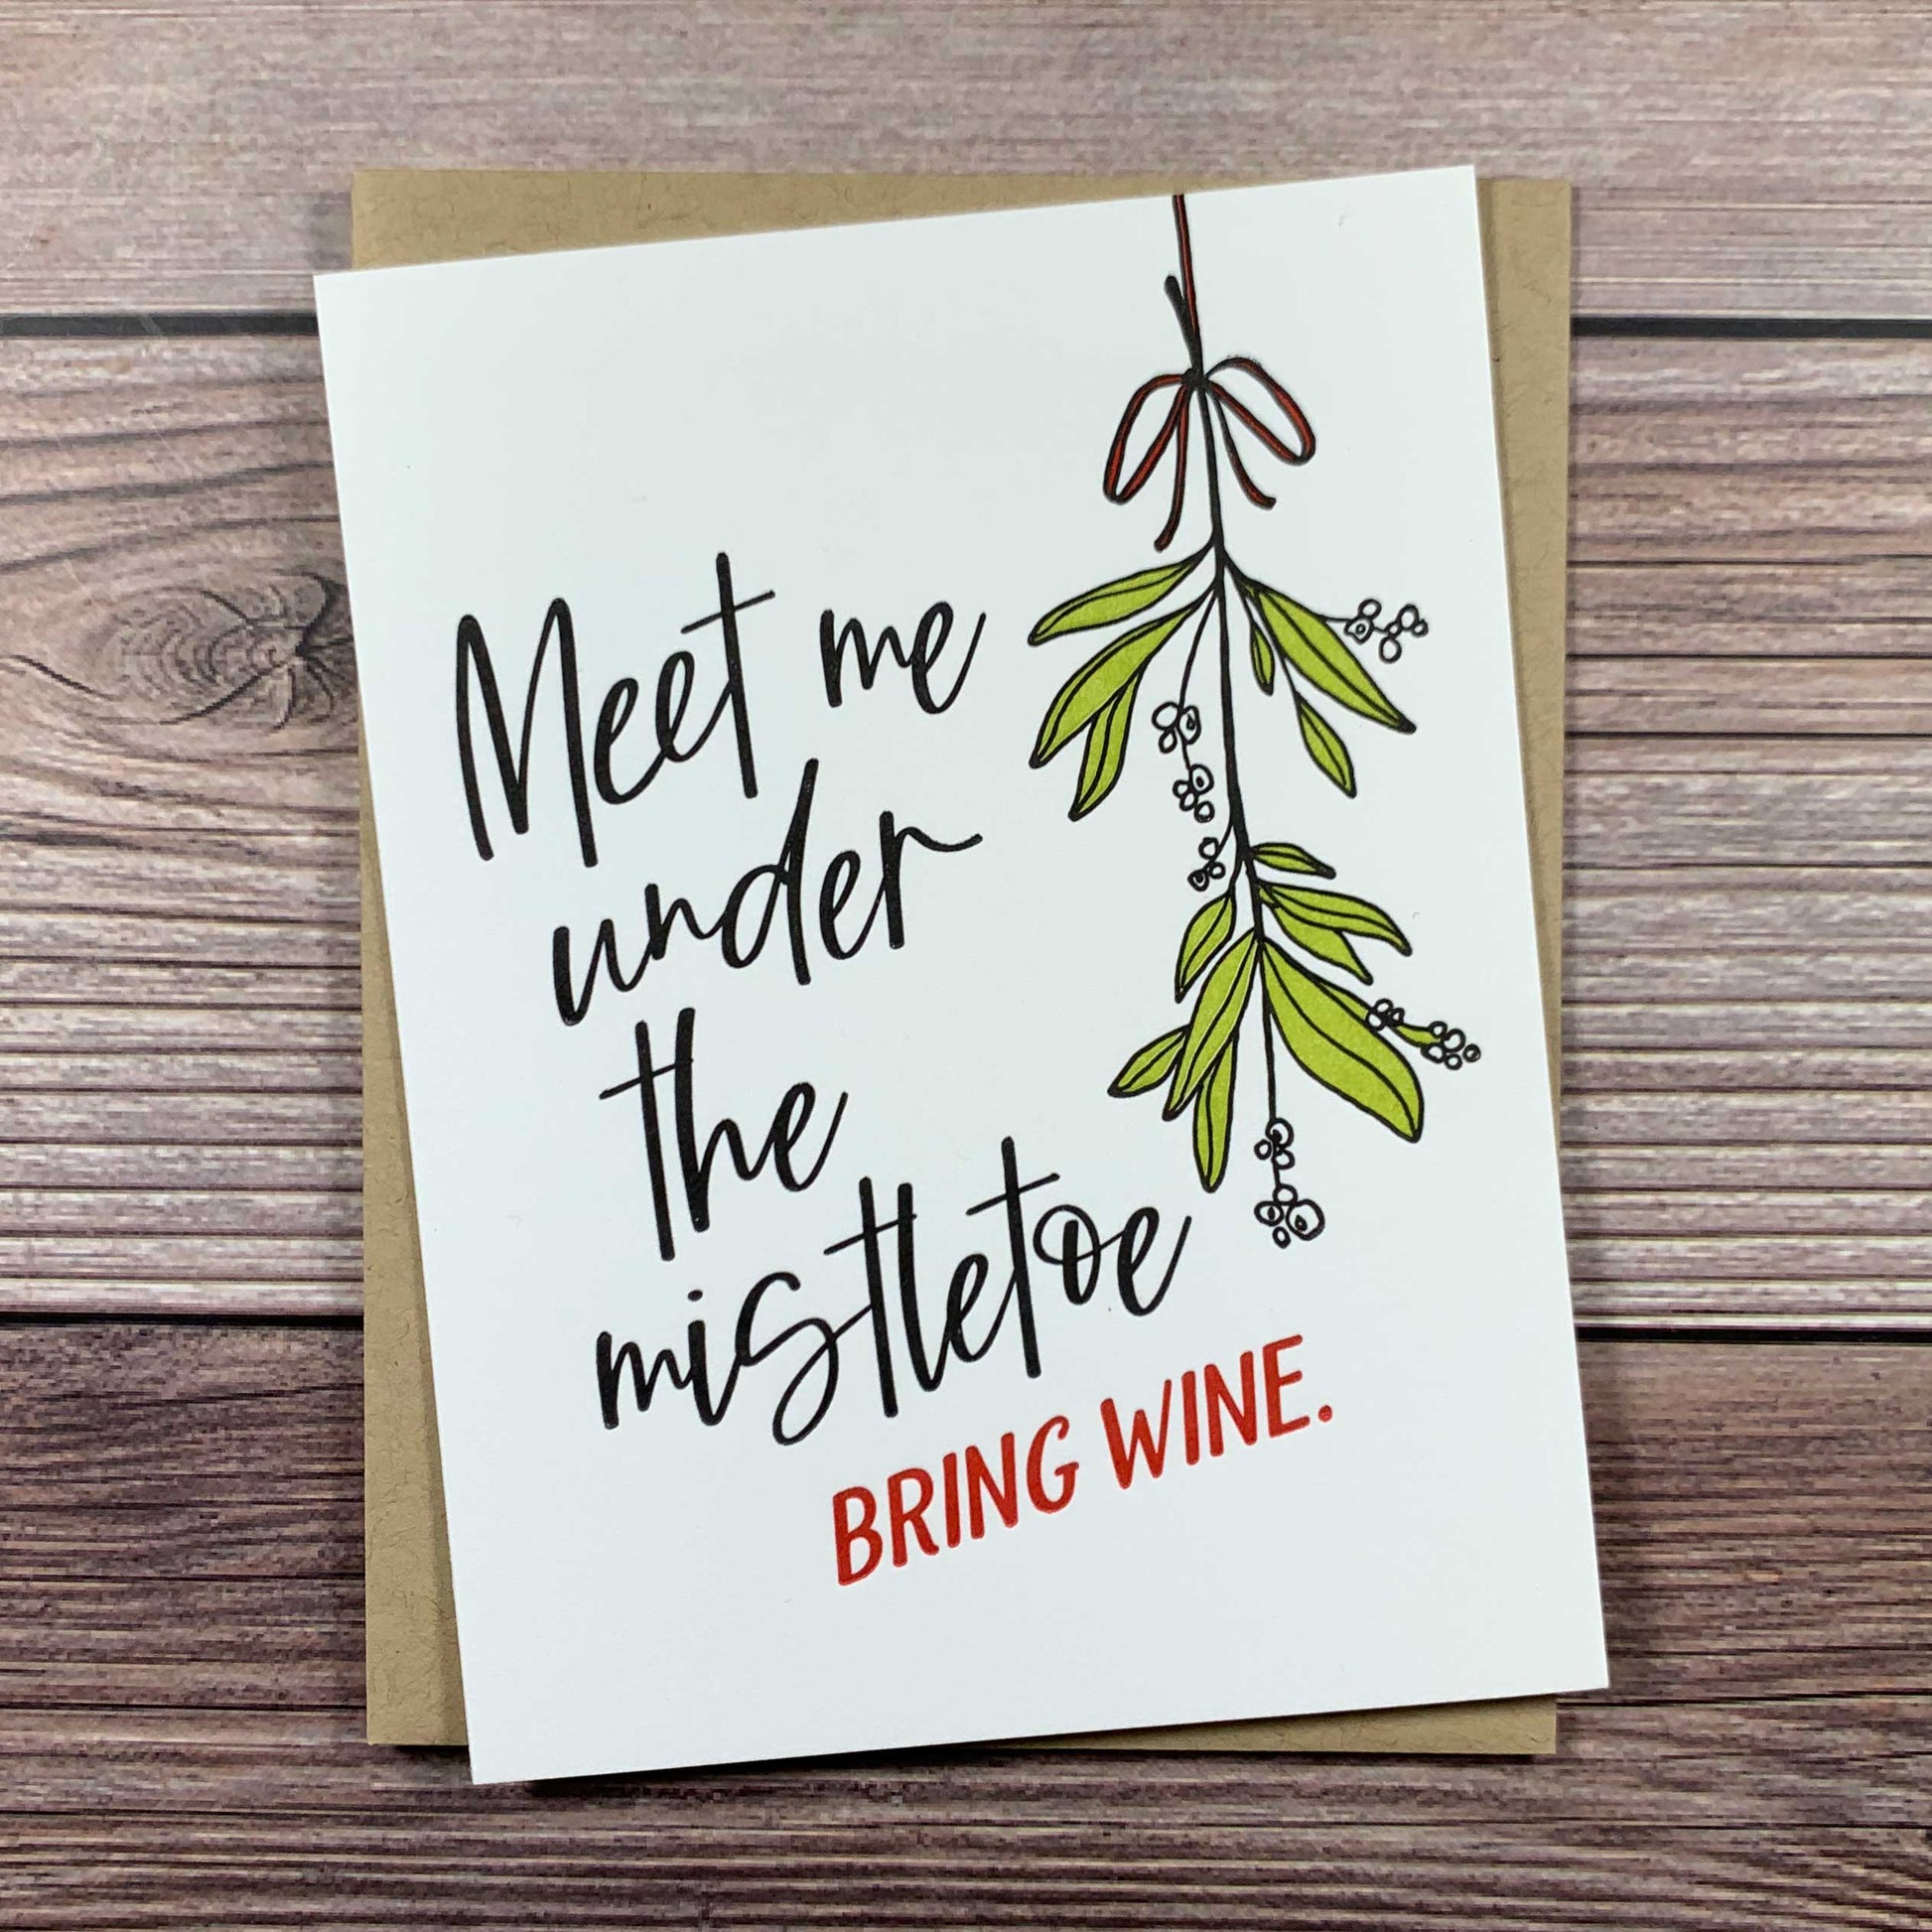 Meet me under the mistletoe, bring wine, christmas card for lover Card, Letterpress printed, includes envelope